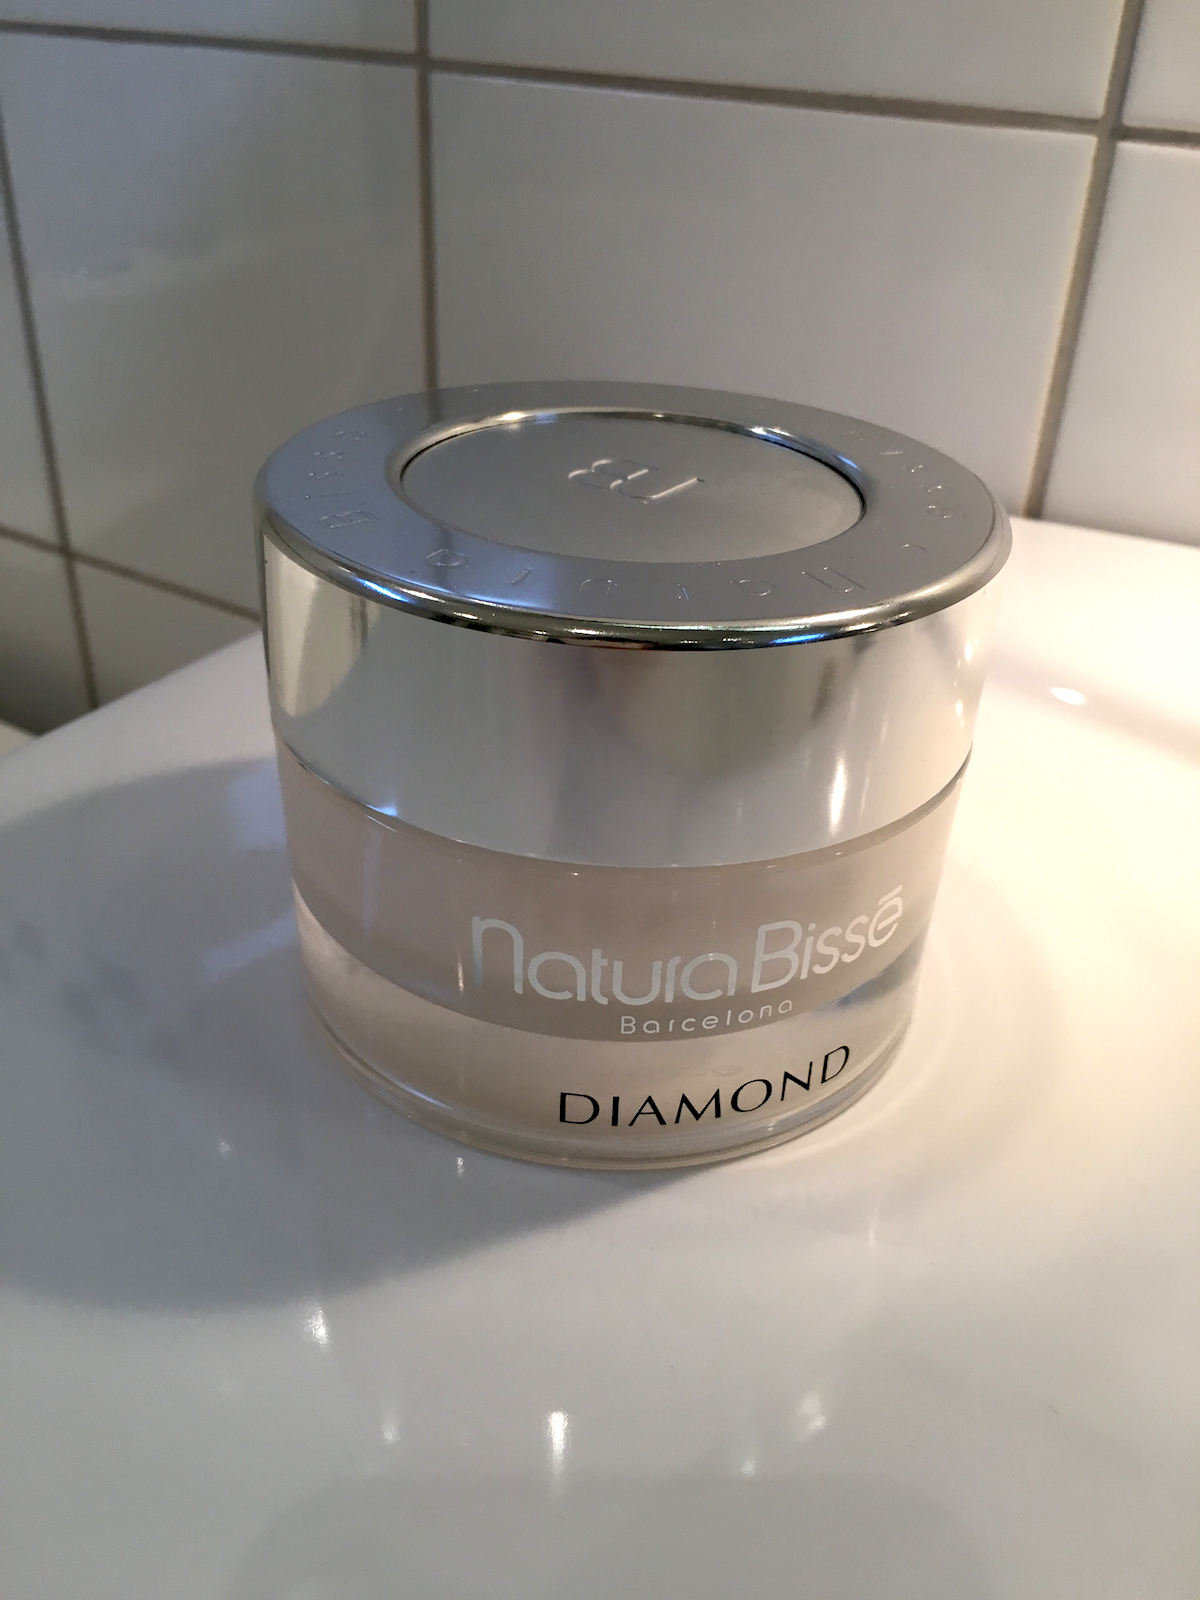 Natura Bisse Diamond Cleanser closed and alone |skonhetssnack.se